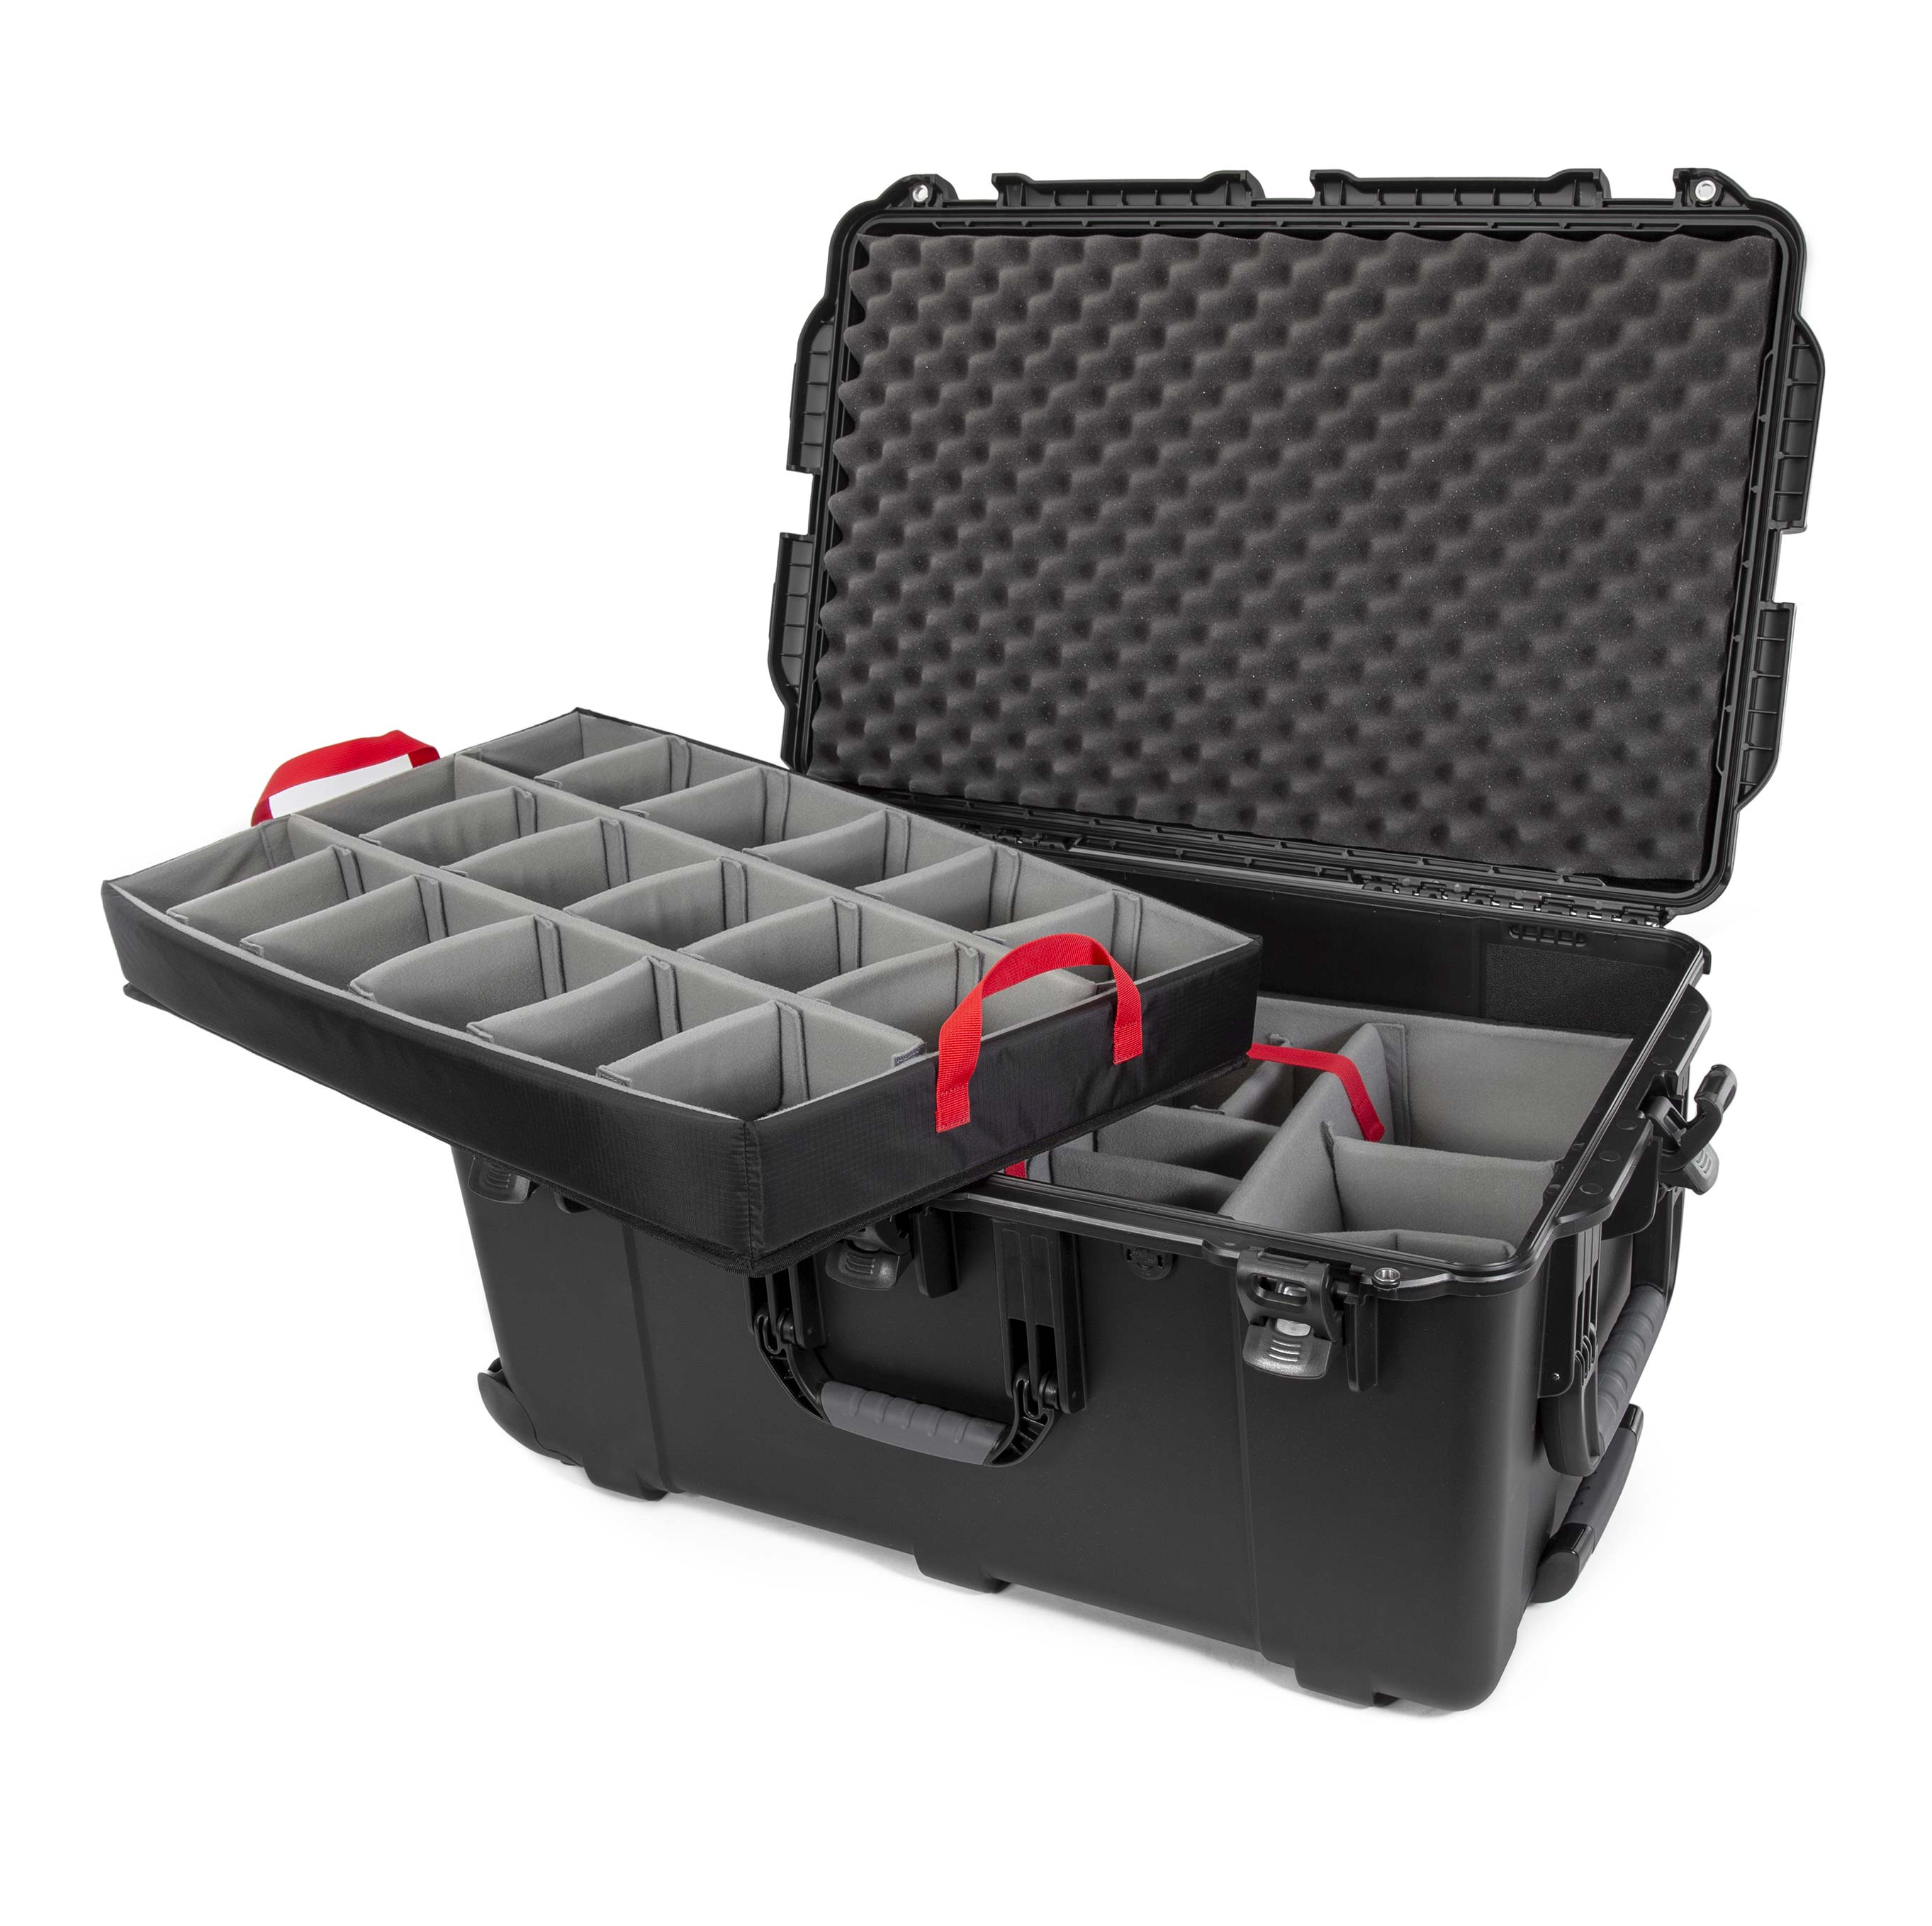 NANUK 965  Official NANUK Protective valise With Wheels Online Store -  Wasserdicht & Unzerstörbar Hart valise - NANUK Europa